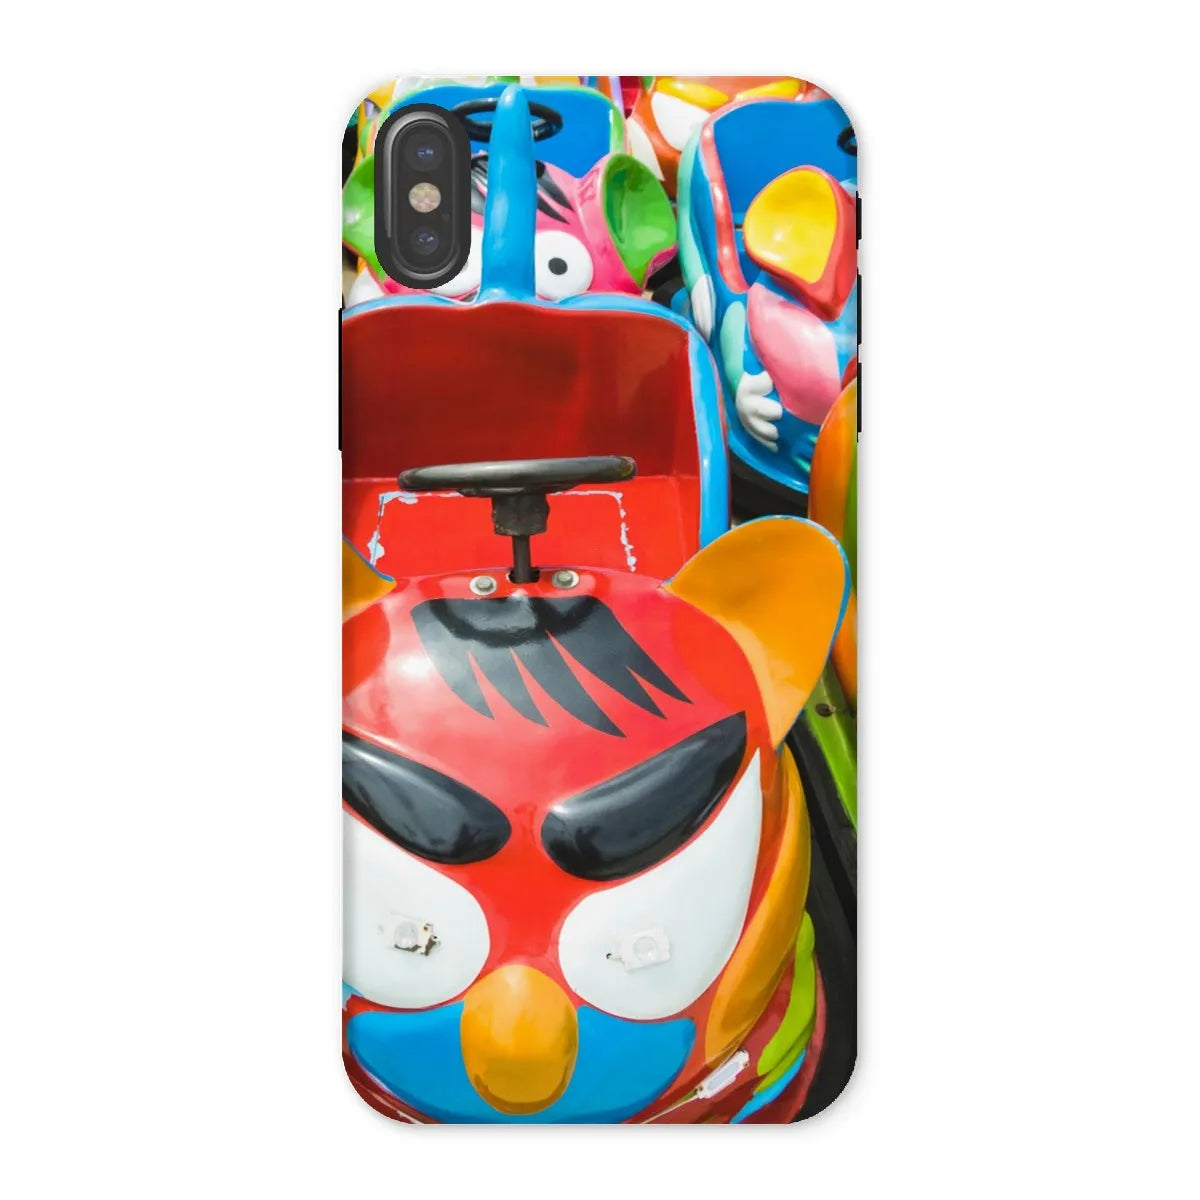 Rat Pack Tough Phone Case - Iphone x / Matte - Mobile Phone Cases - Aesthetic Art